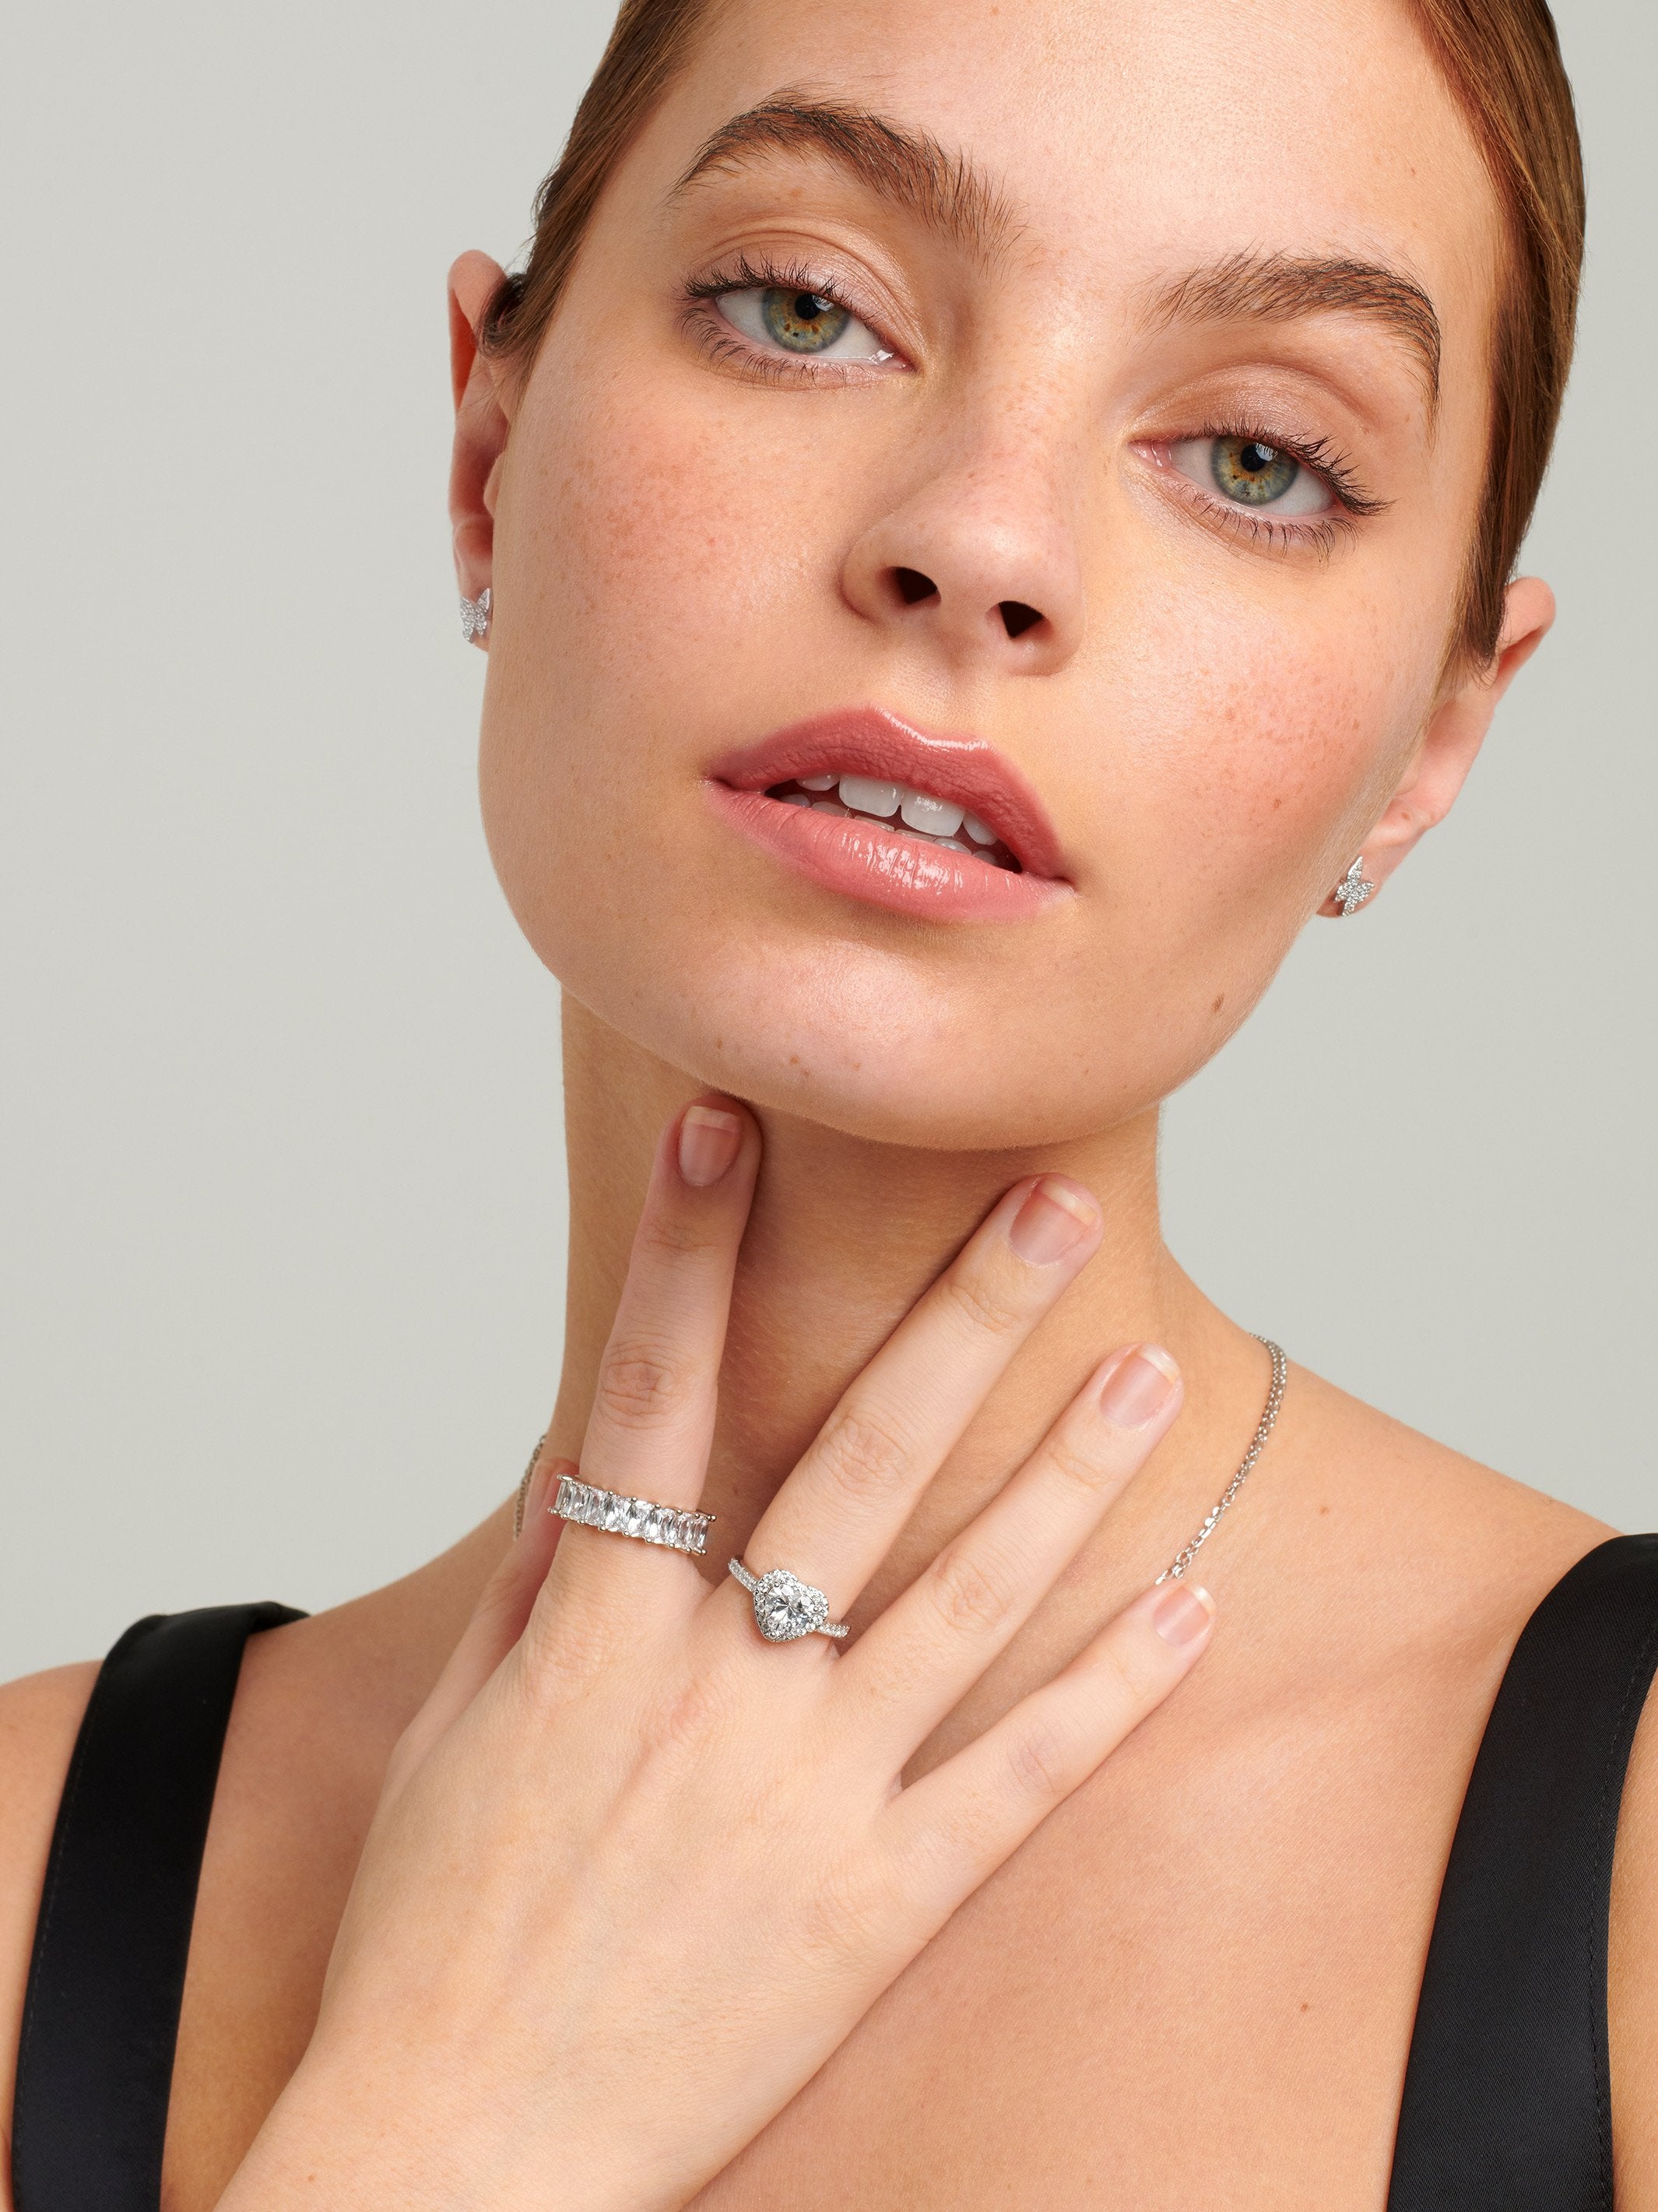 Female model wearing a sterling silver heart ring.